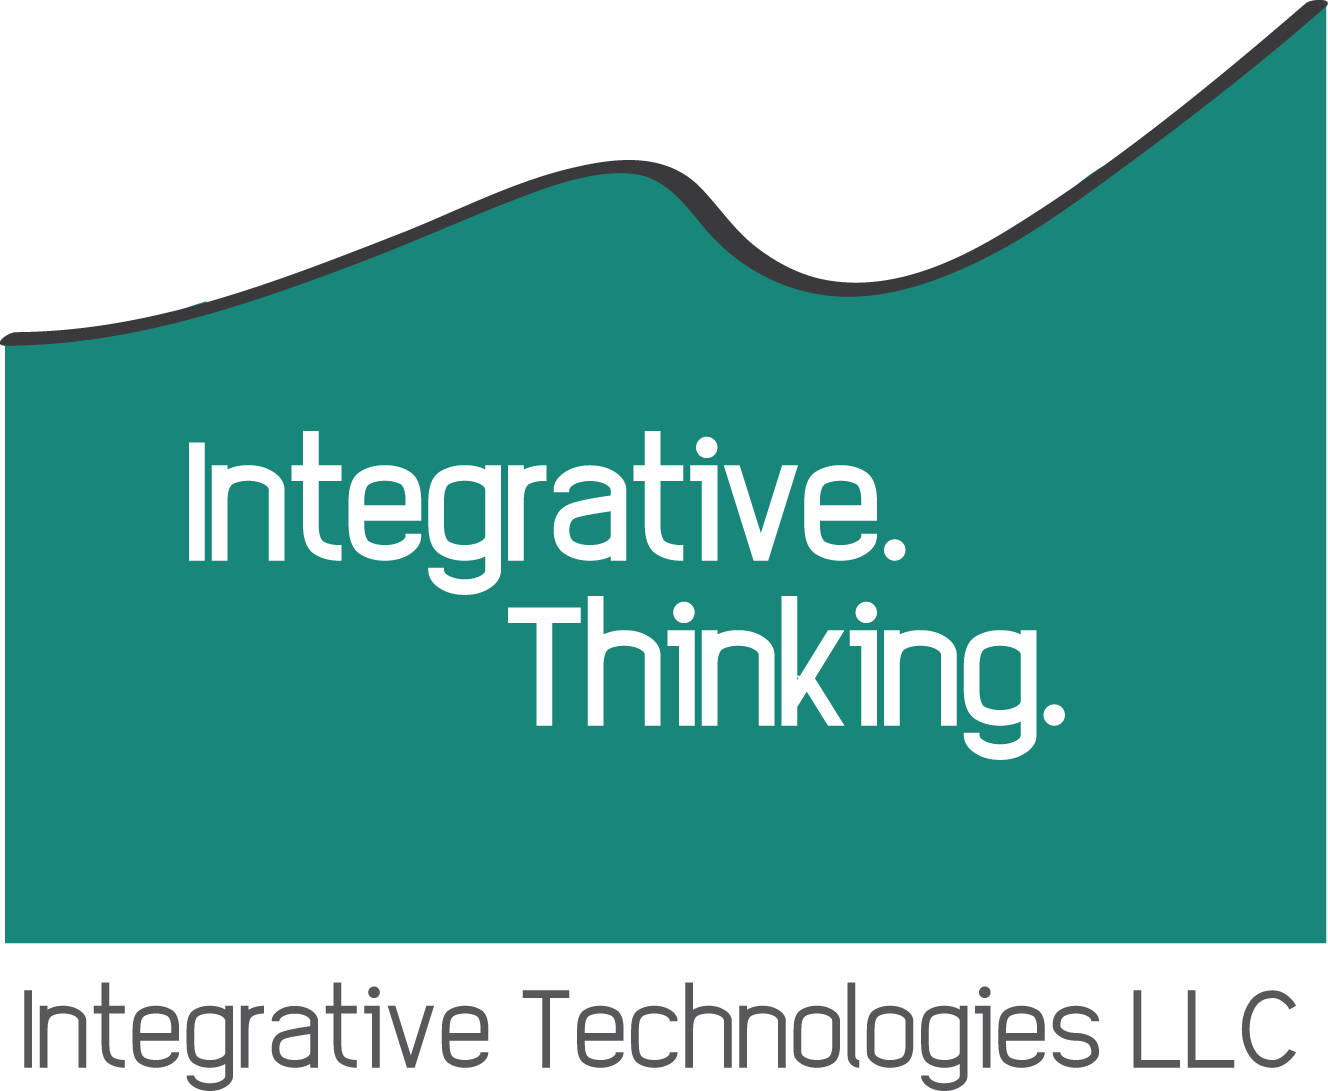 Integrative Technologies